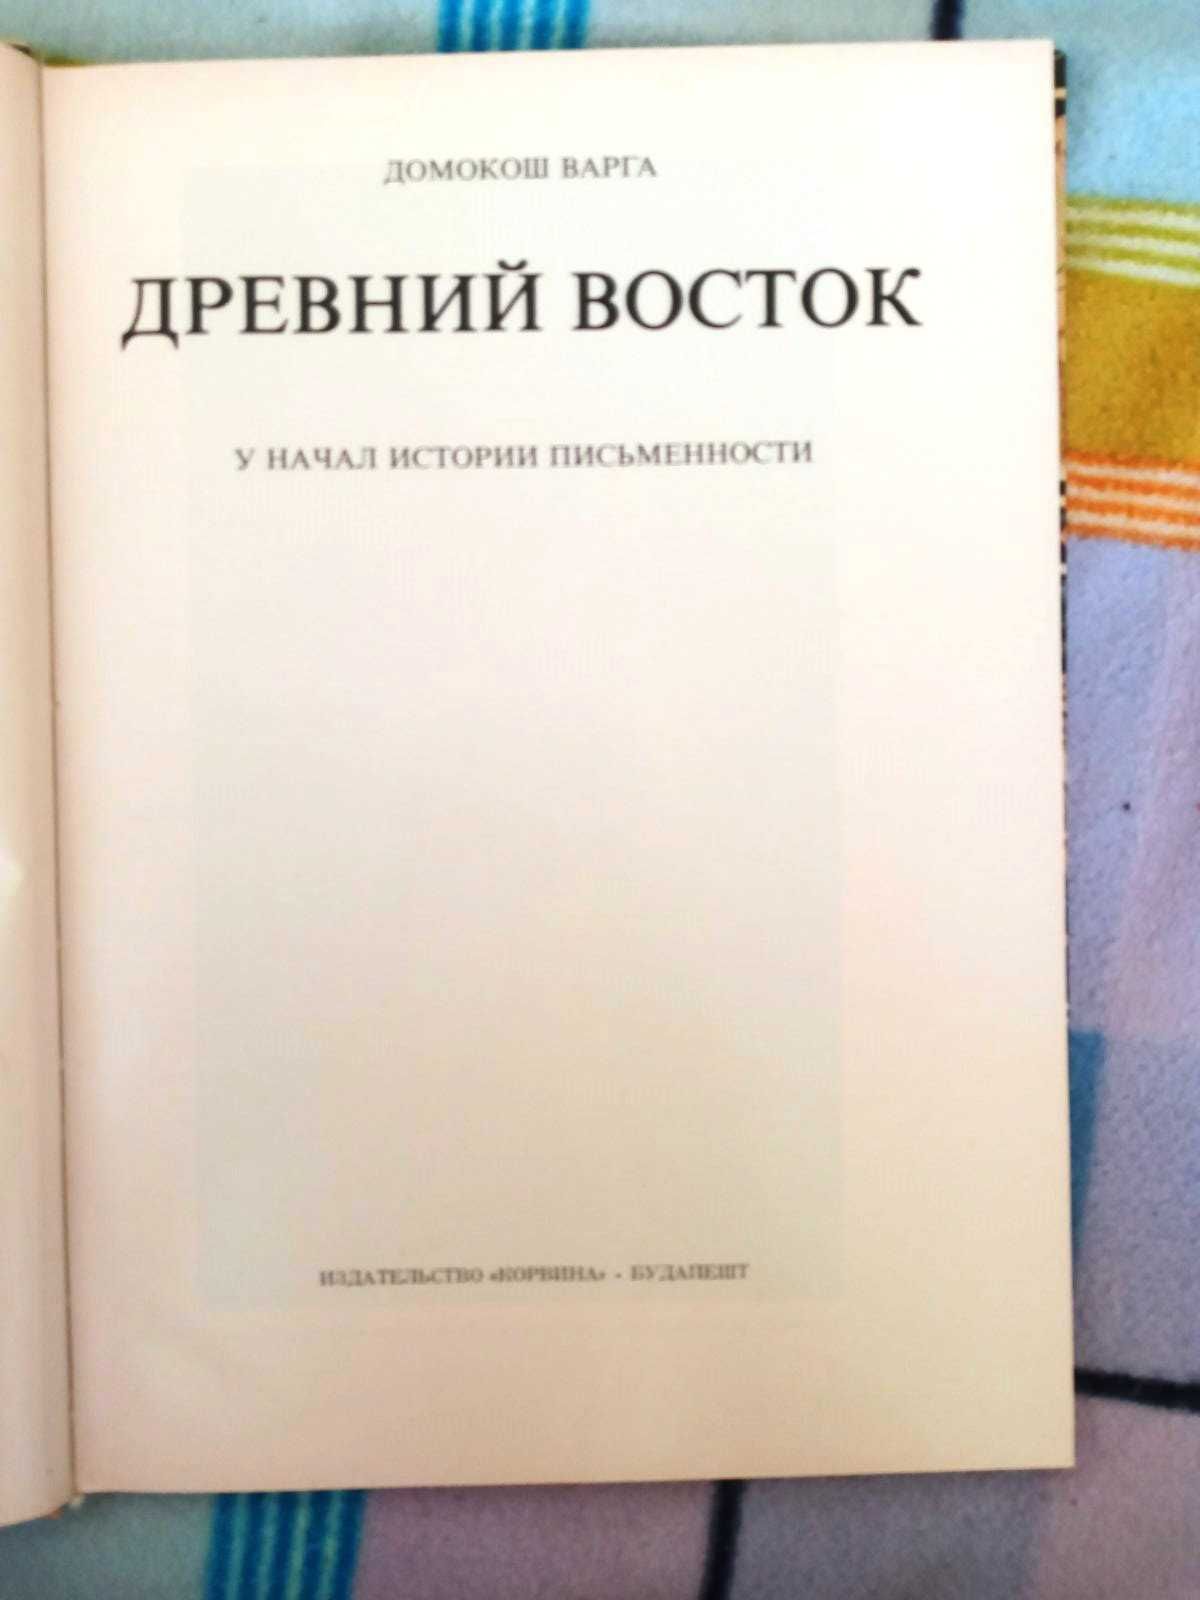 Книга "Древний восток", Домокош Варга, 1979 р.